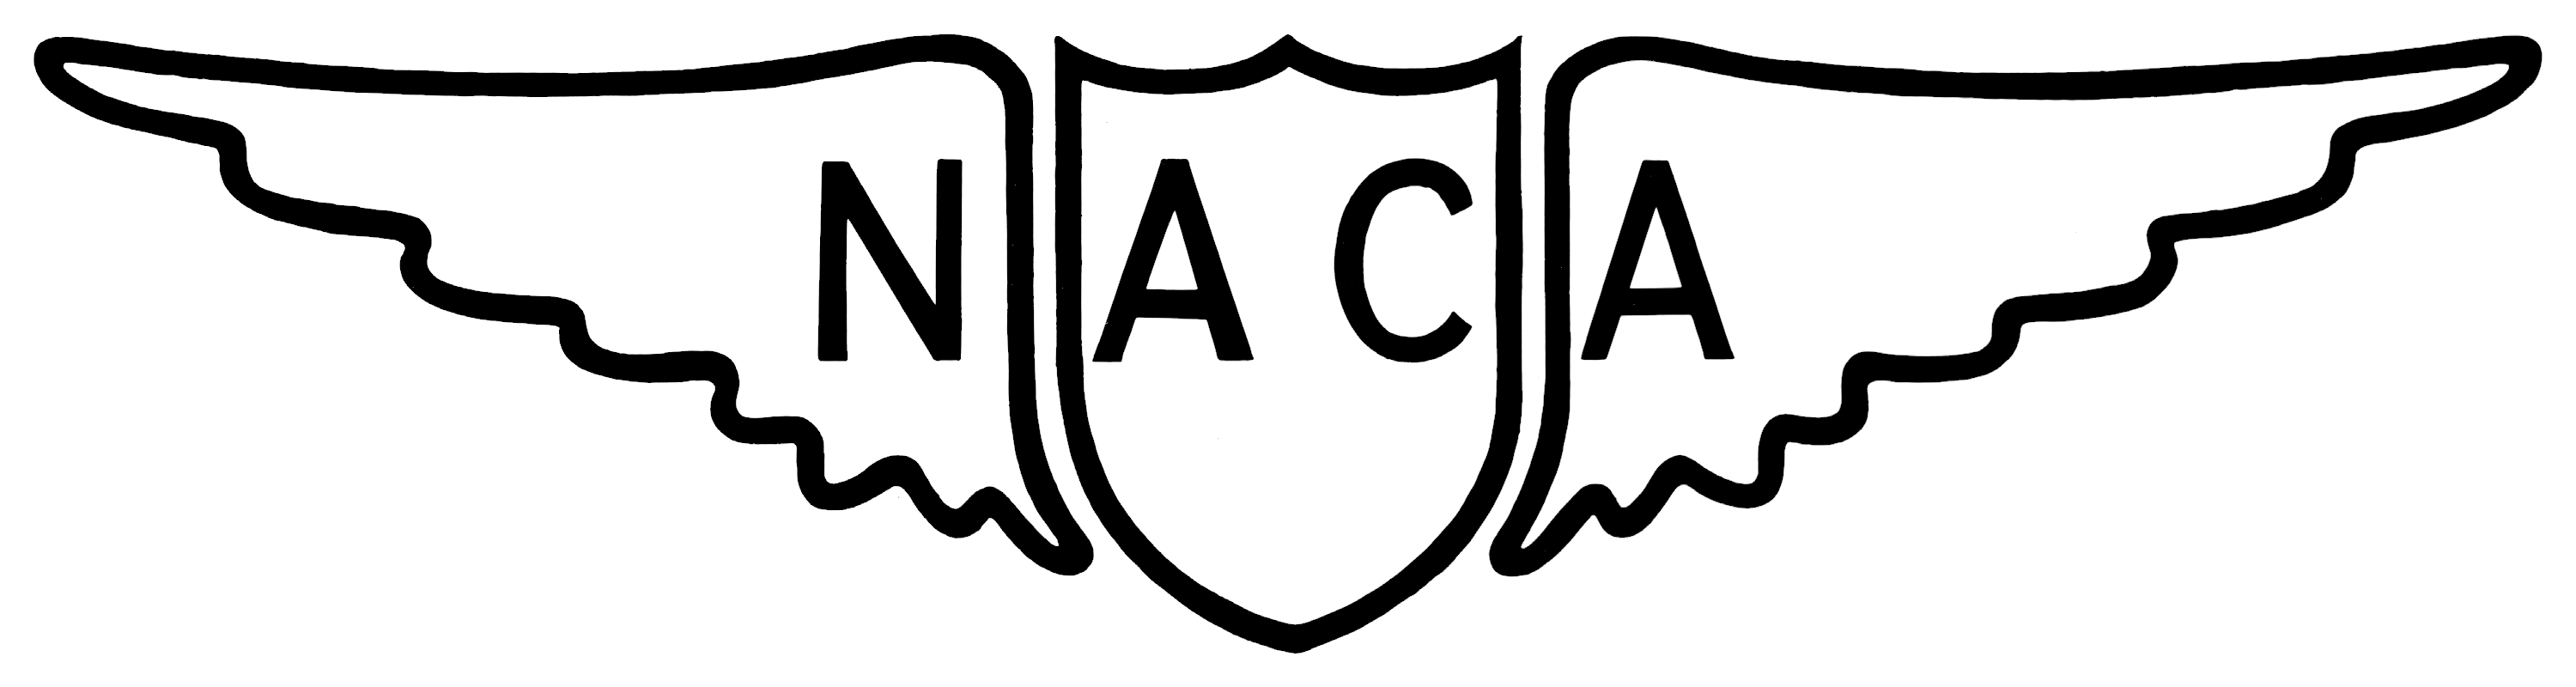 Aeronautics NACA Logo - File:NACA-Logo.png - Wikimedia Commons